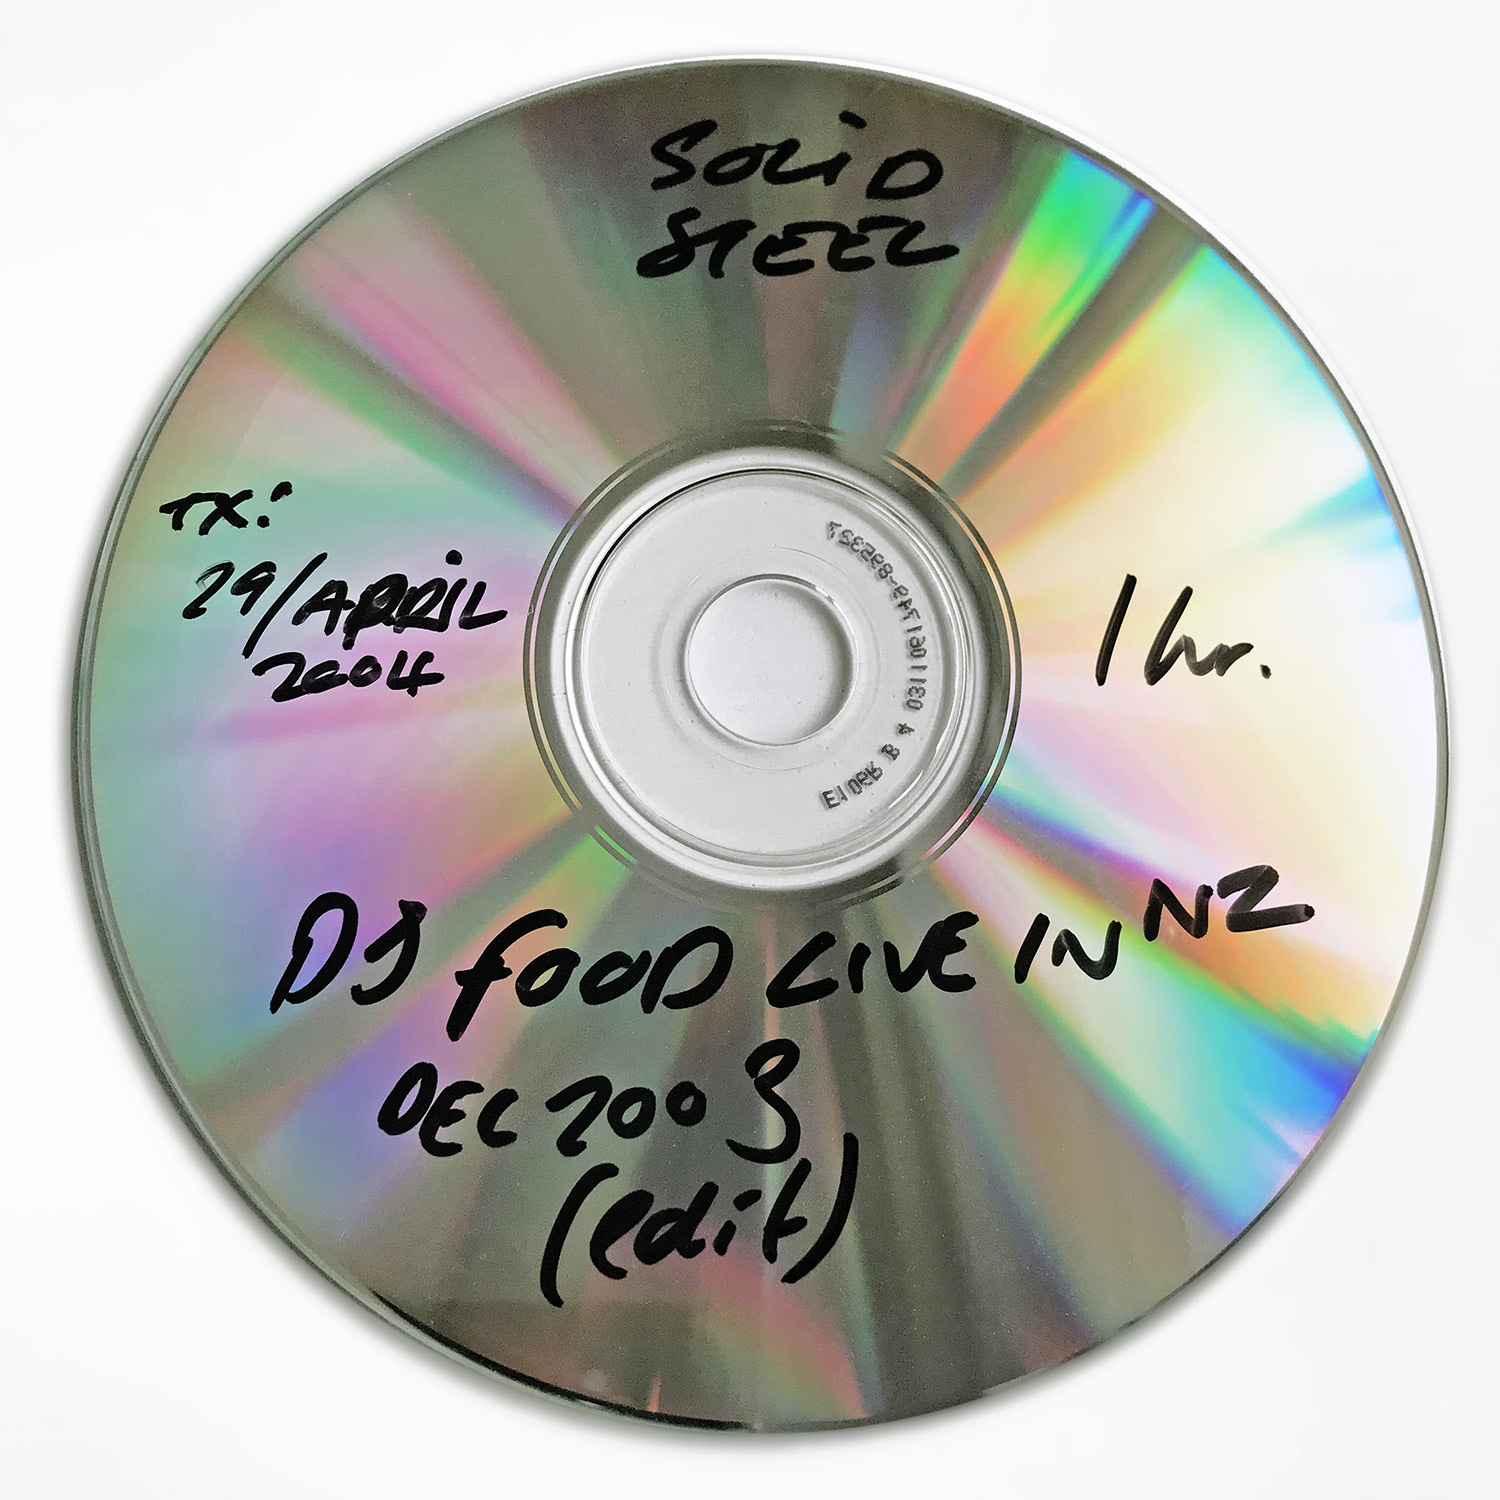 MS197 DJ Food Live In NZ Edit (Dec 2003) 29:04:2004 CDr